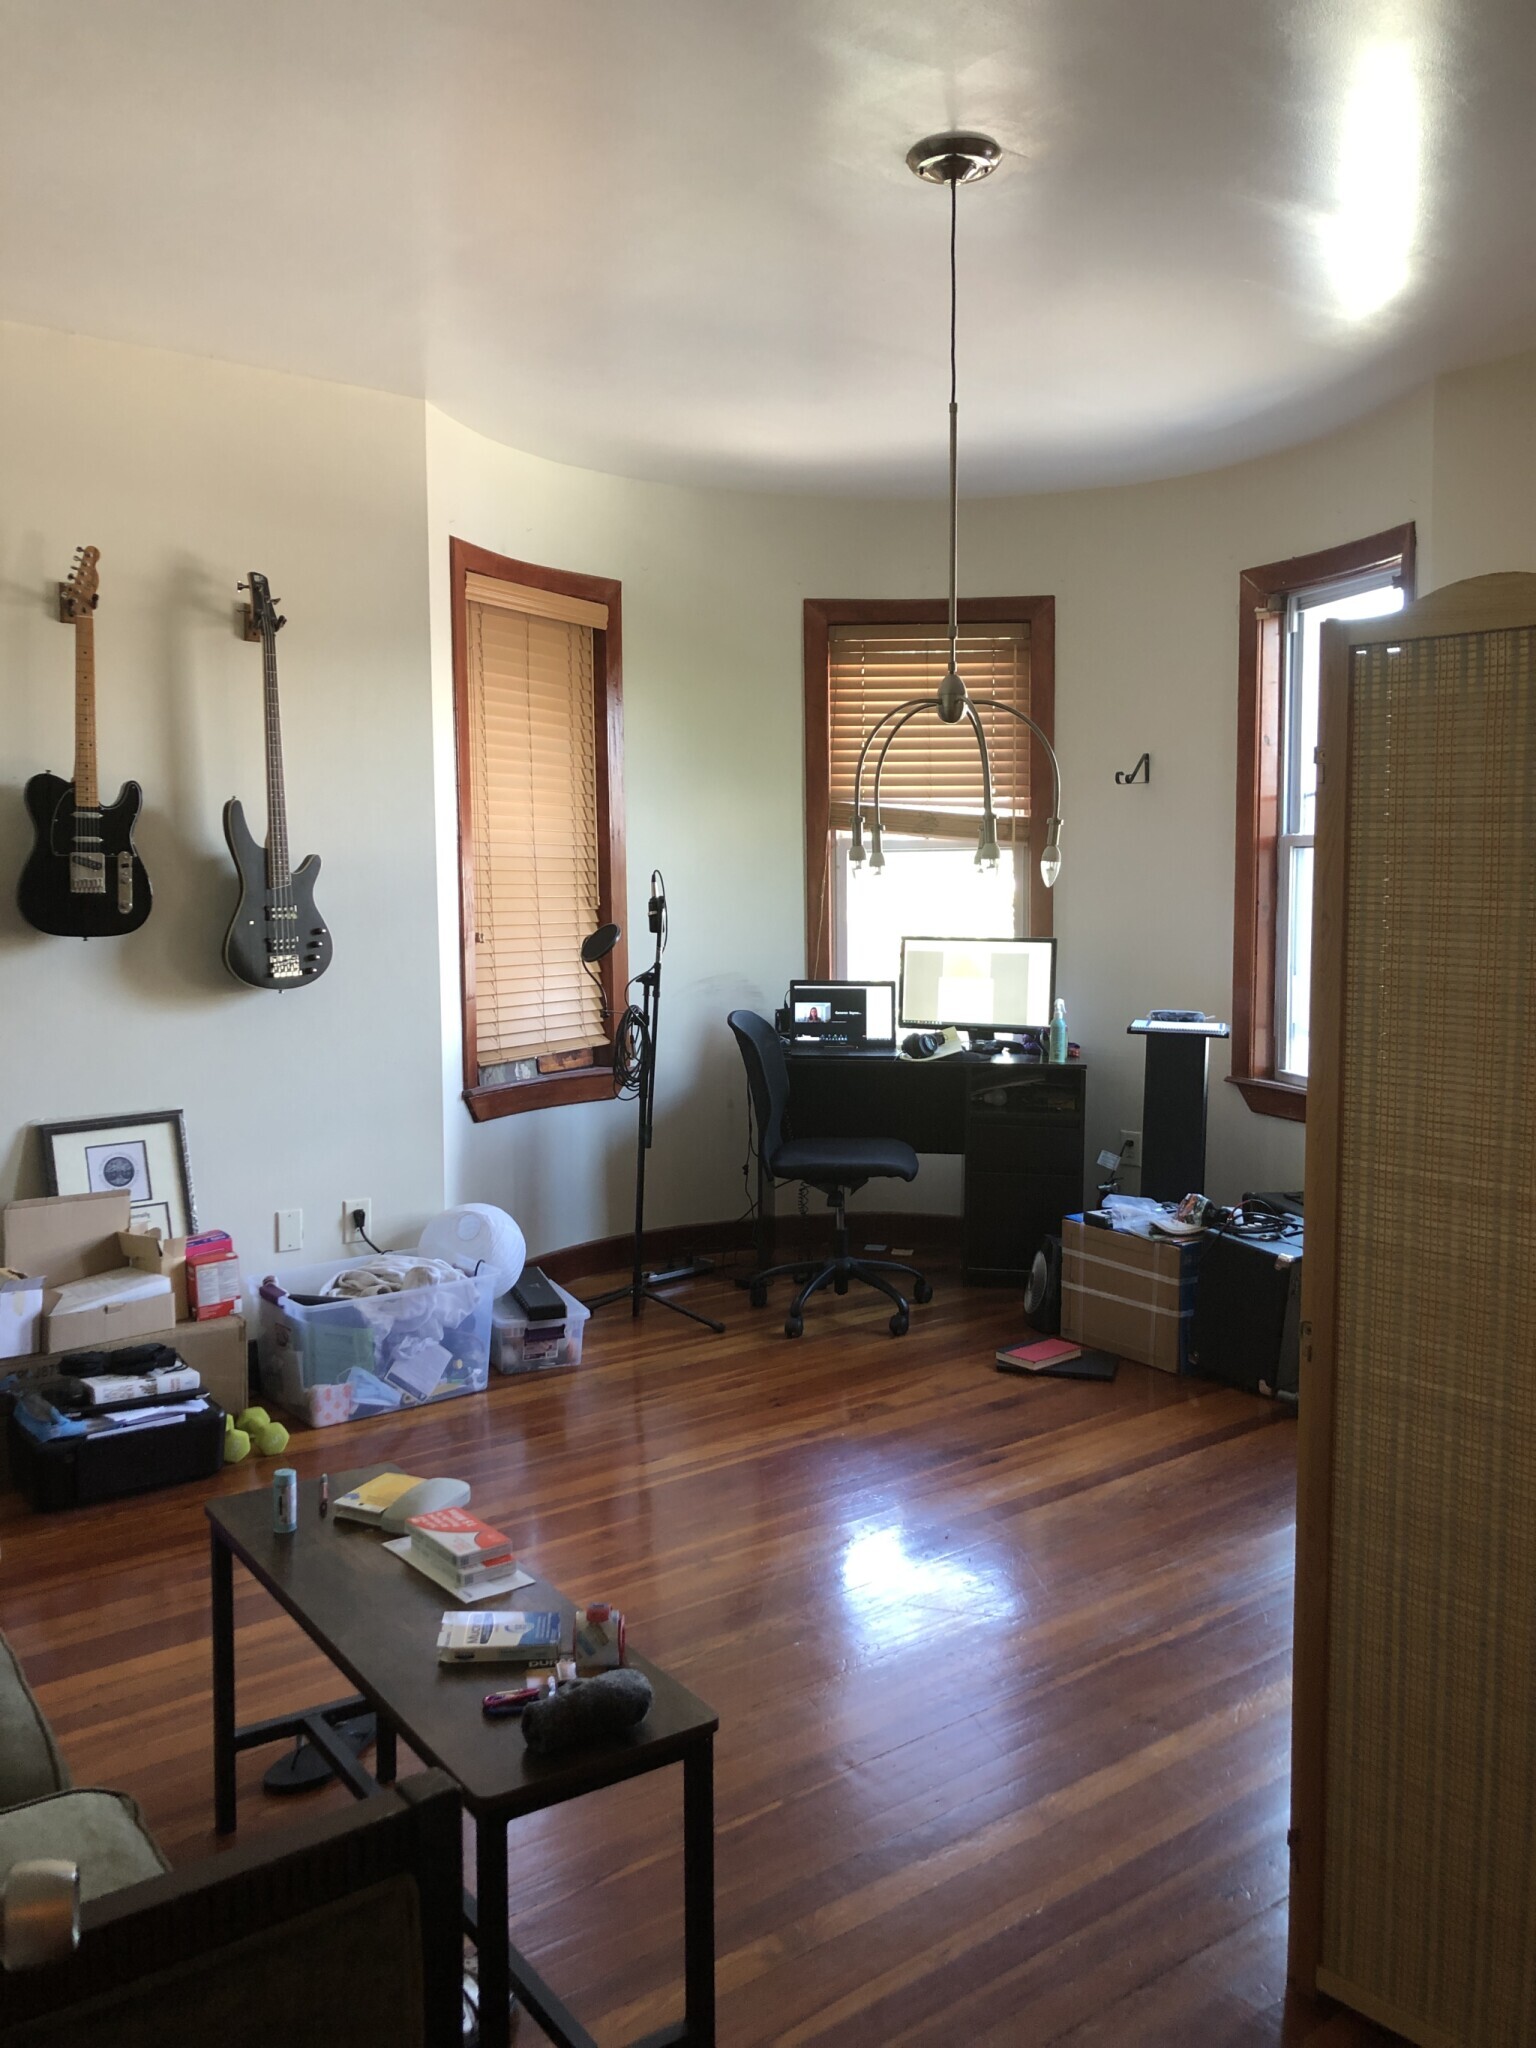 Photos of apartment on Centre St.,Boston MA 02130